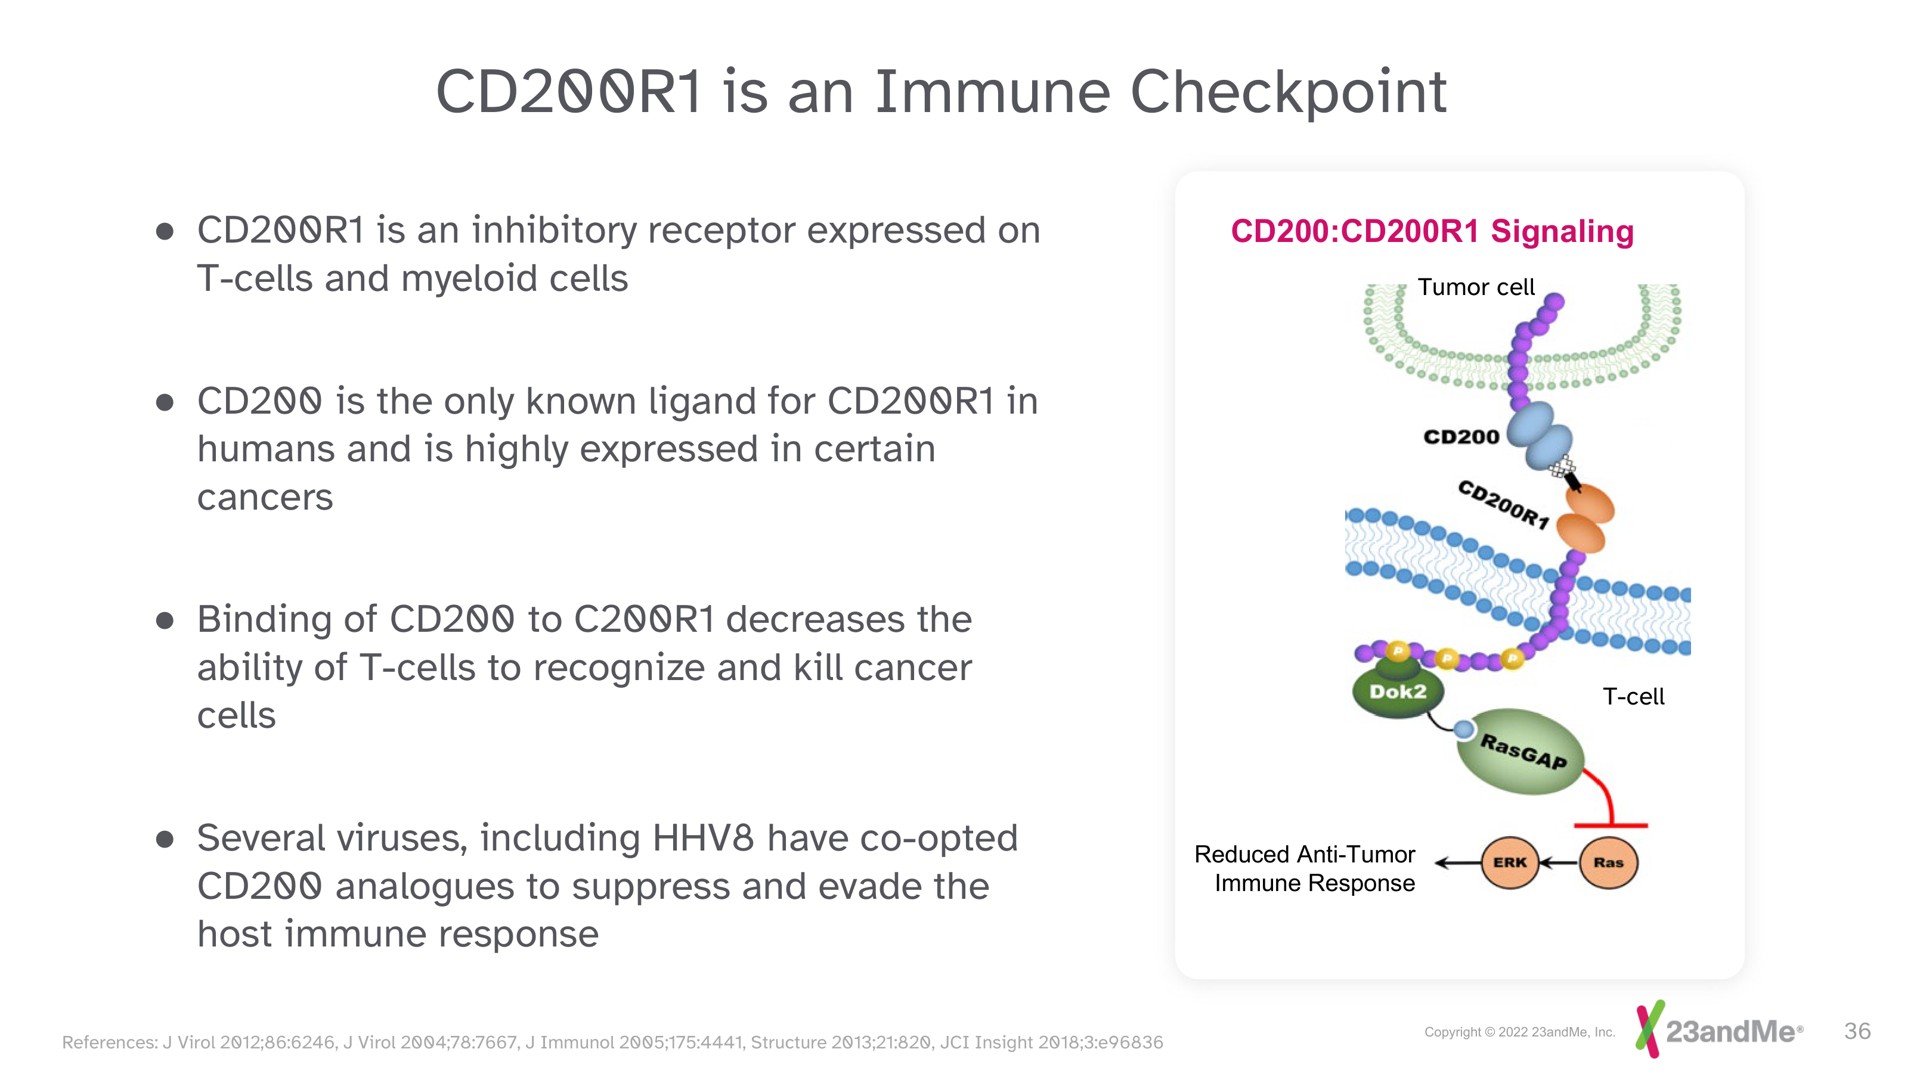 is an immune | 23andMe